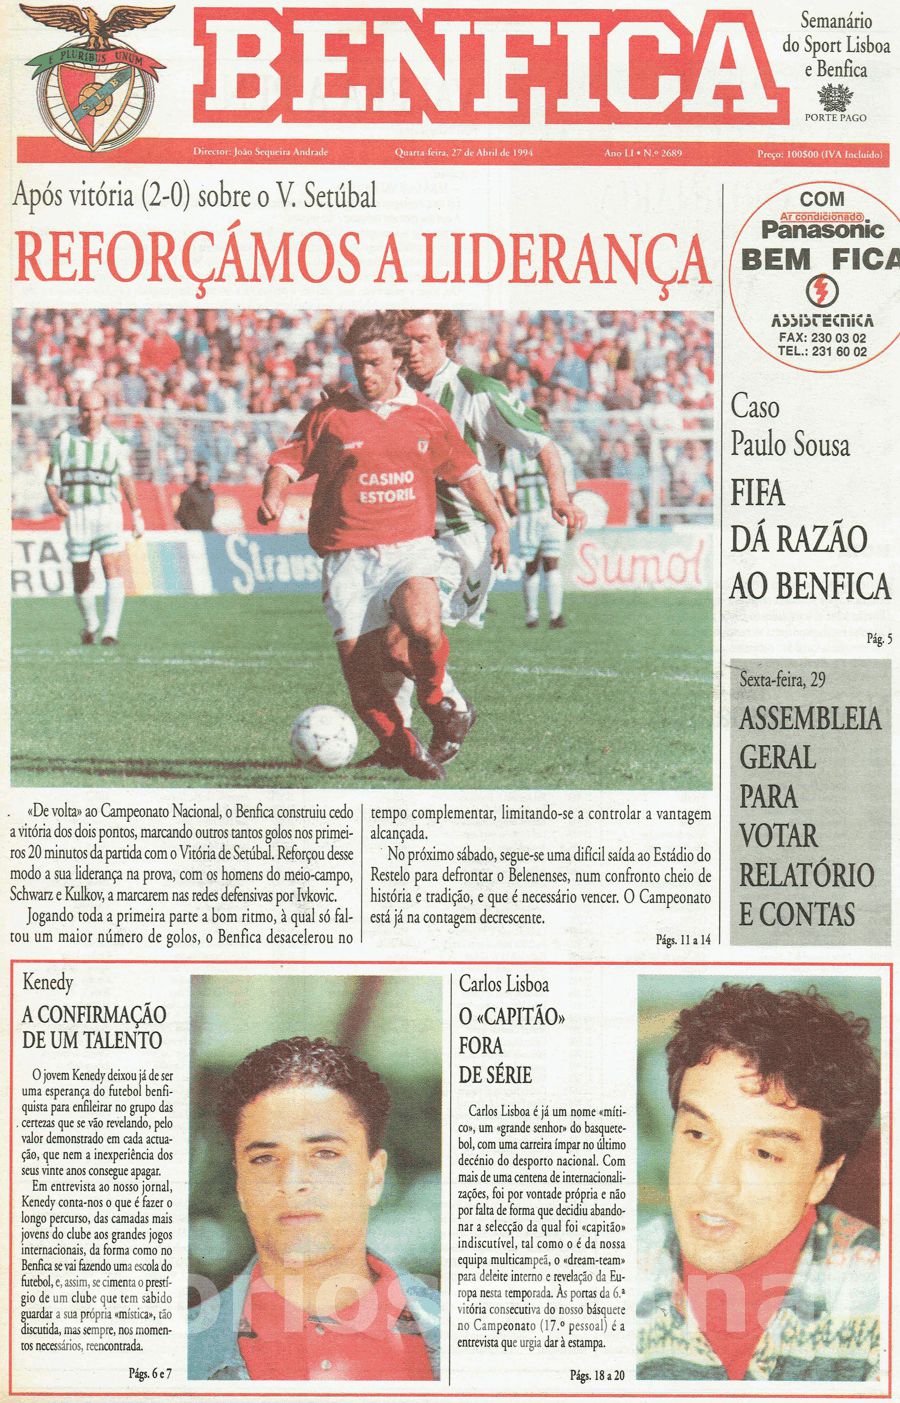 jornal o benfica 2689 1994-04-27